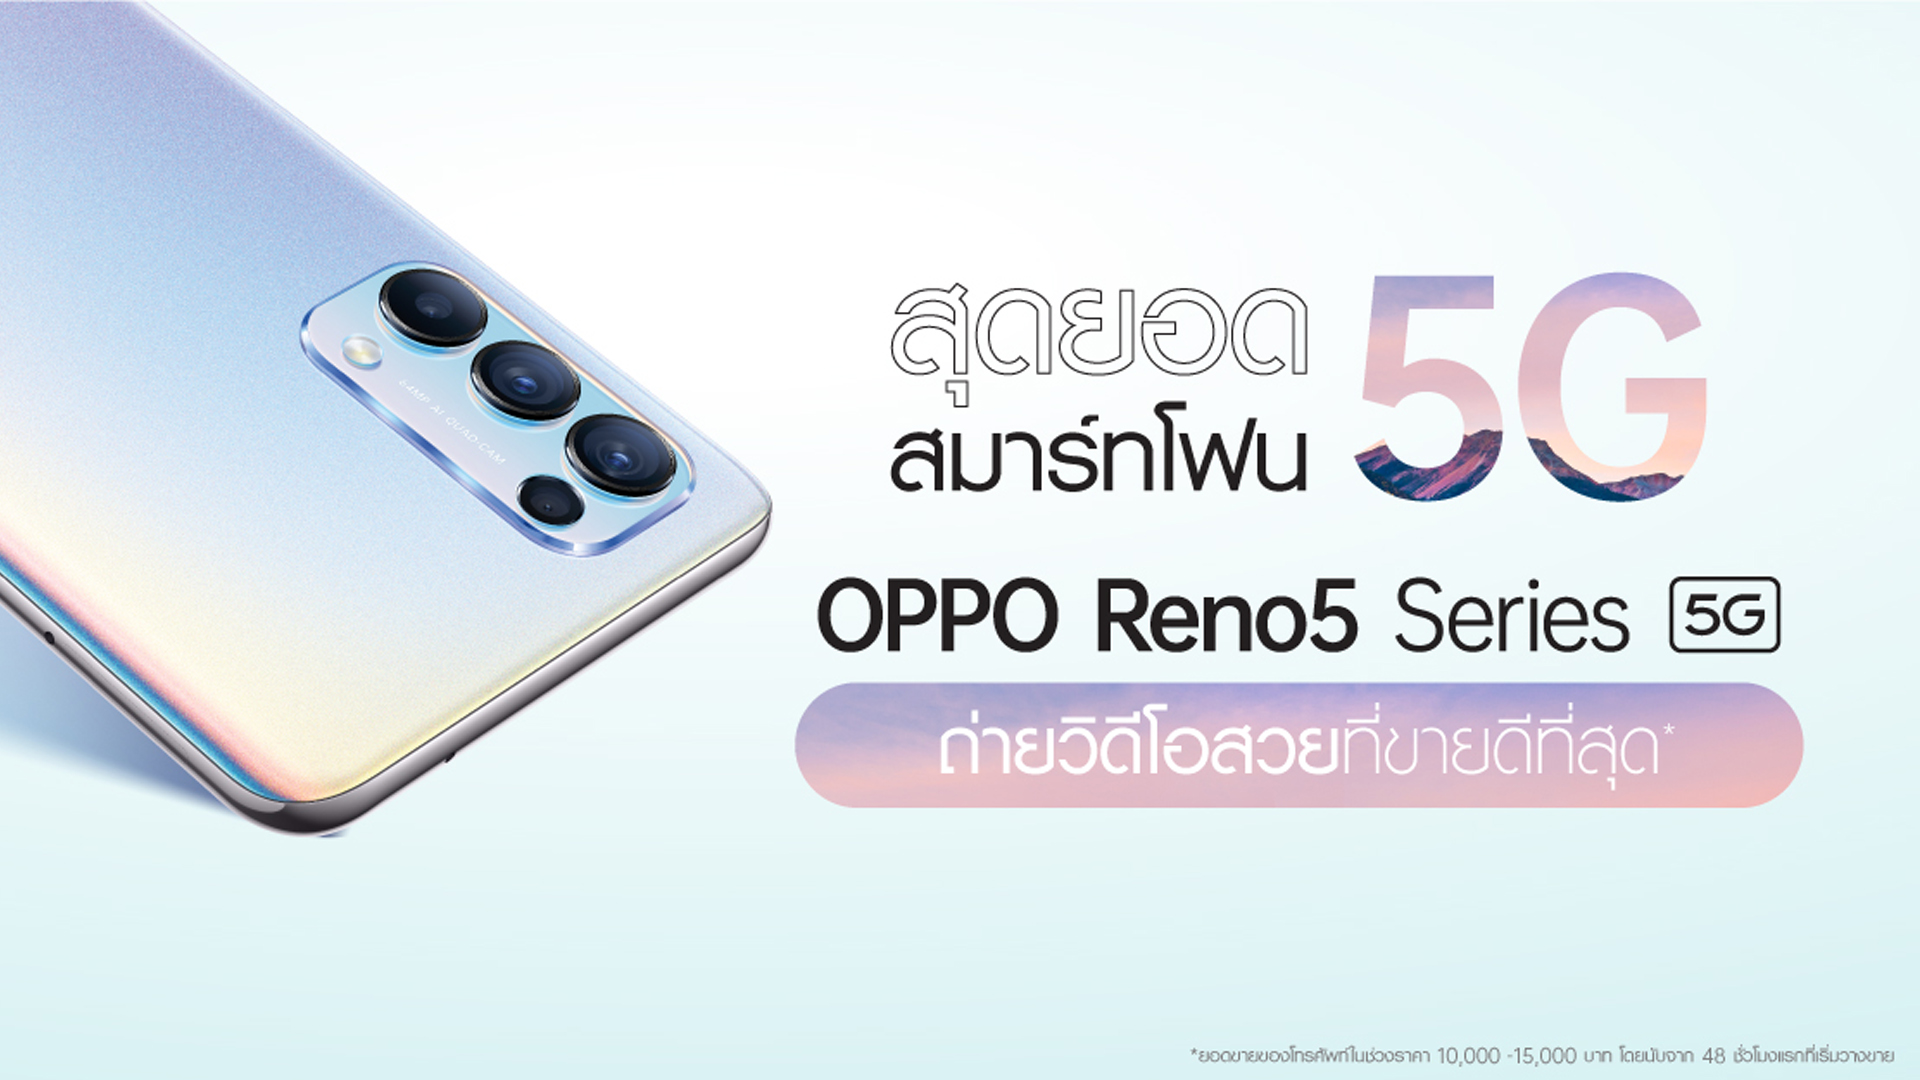 OPPO Reno5 Series 5G สมาร์ตโฟน 5G ที่สุดของวิดีโอ Portrait พร้อมขึ้นแท่นสมาร์ตโฟนที่มียอดขายอันดับ 1